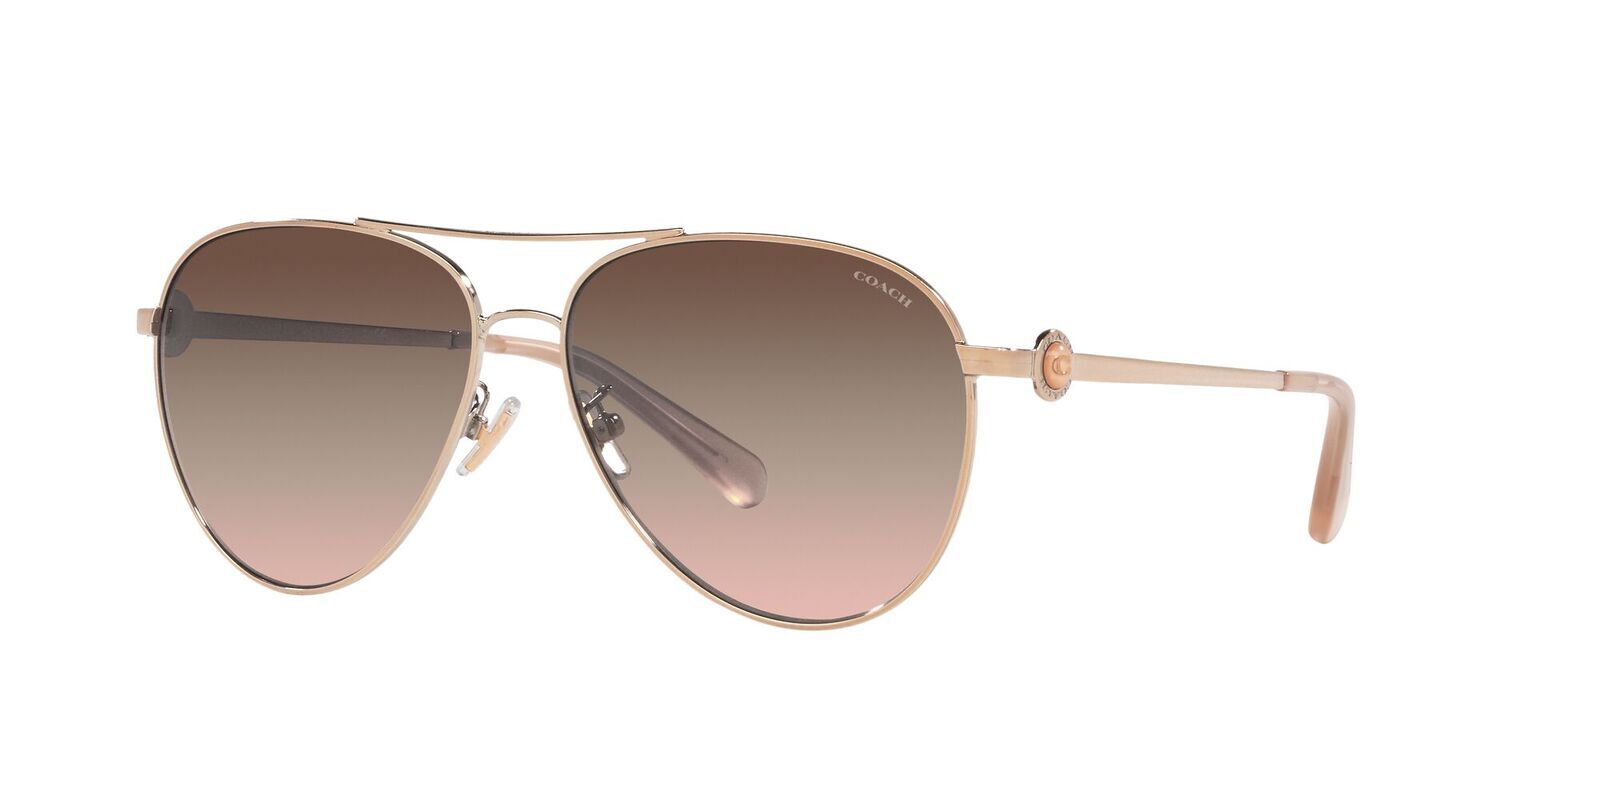 COACH Sunglasses | Women's Designer Sunglasses - Pretavoir